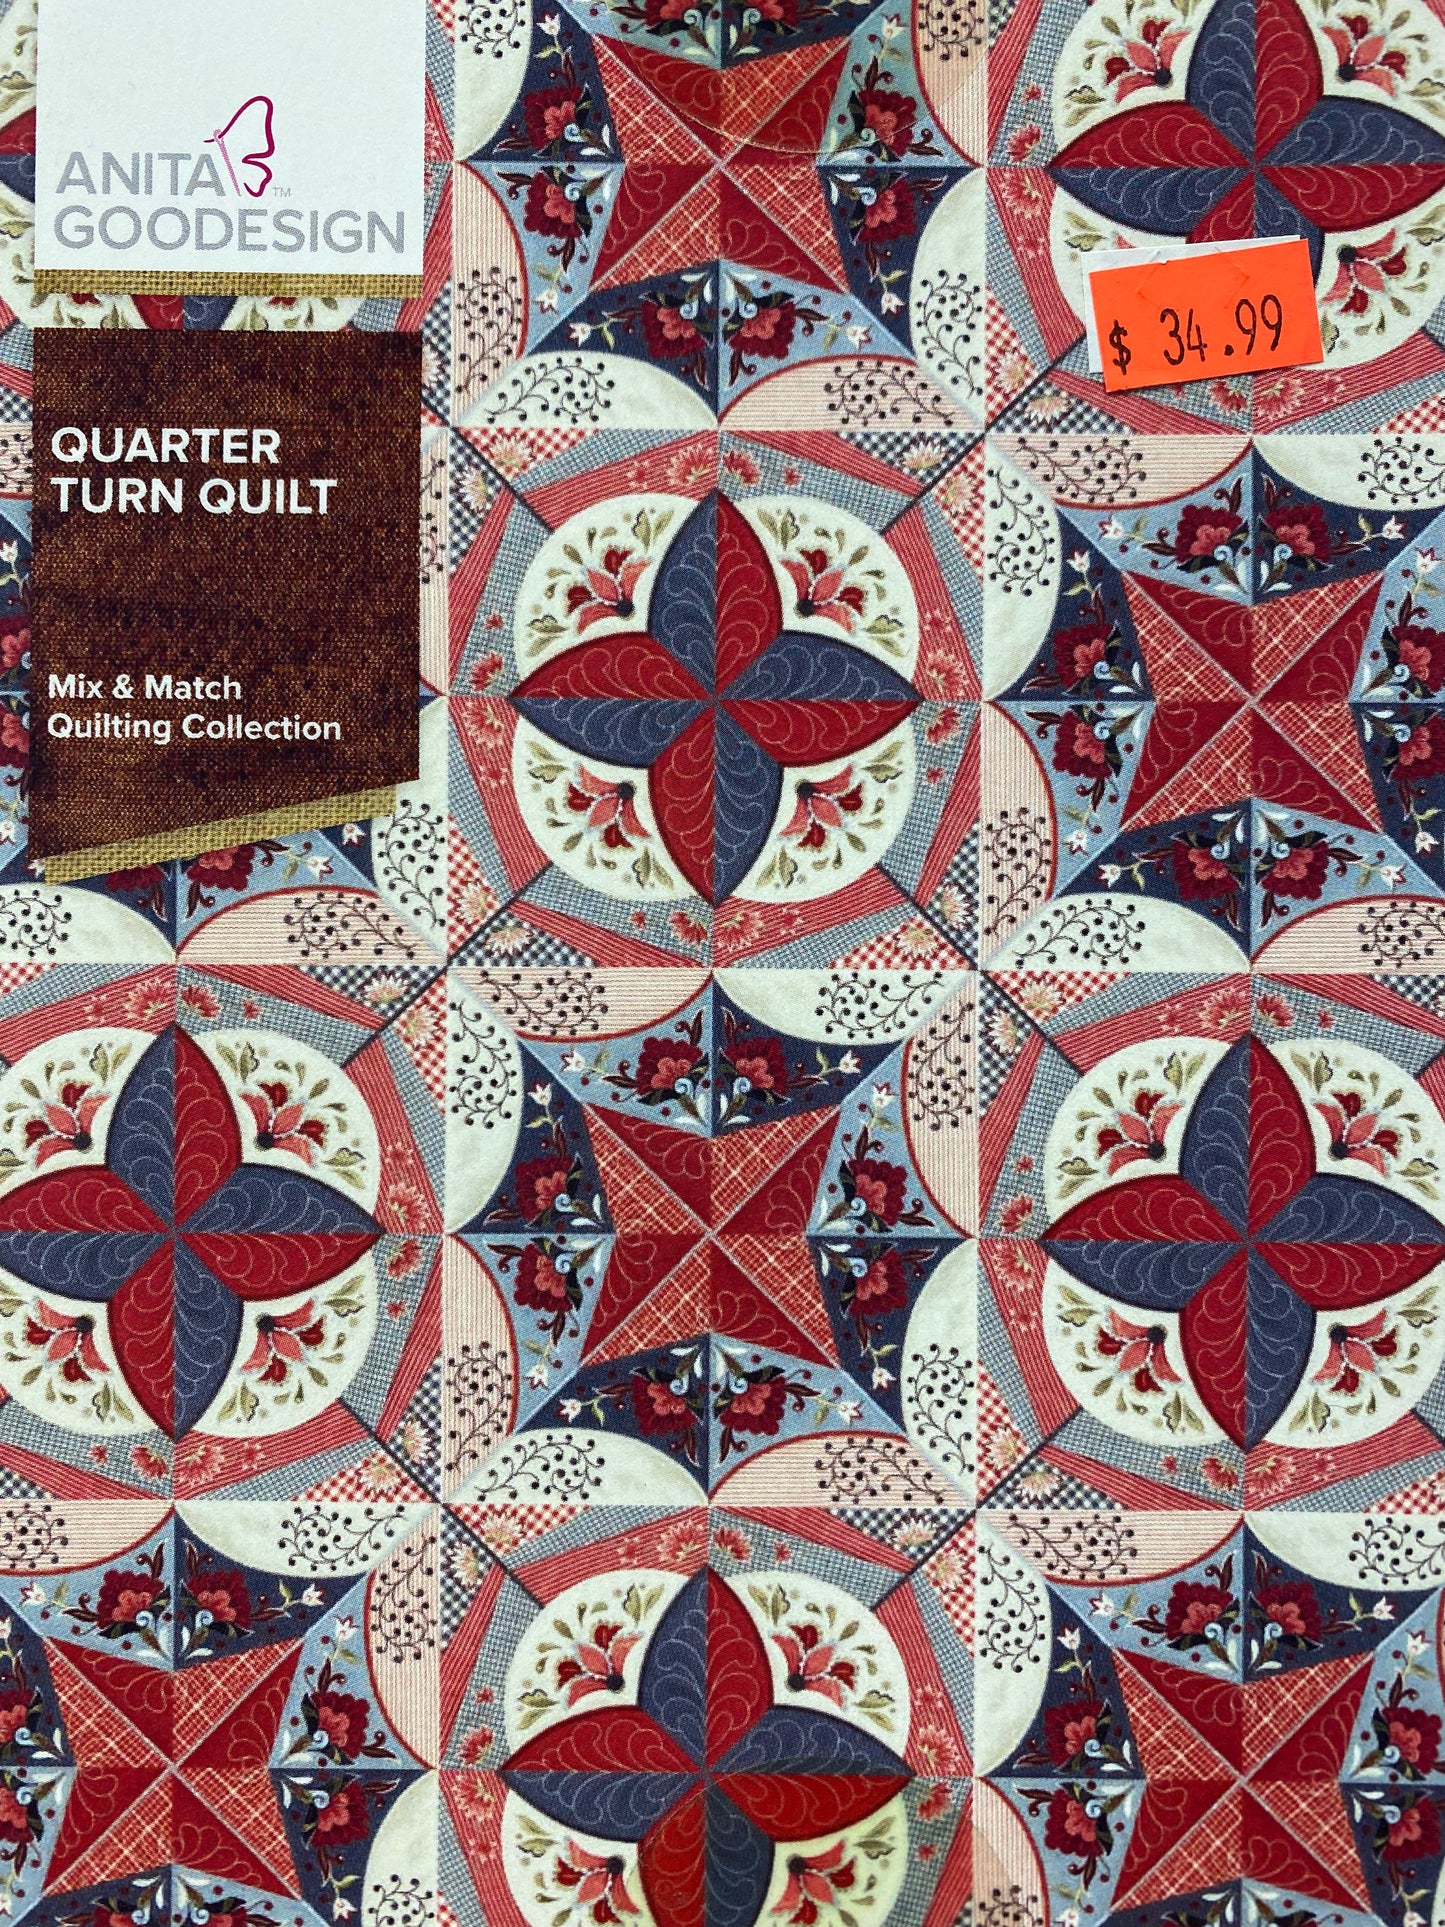 Quarter Turn Quilt by Anita Goodesign